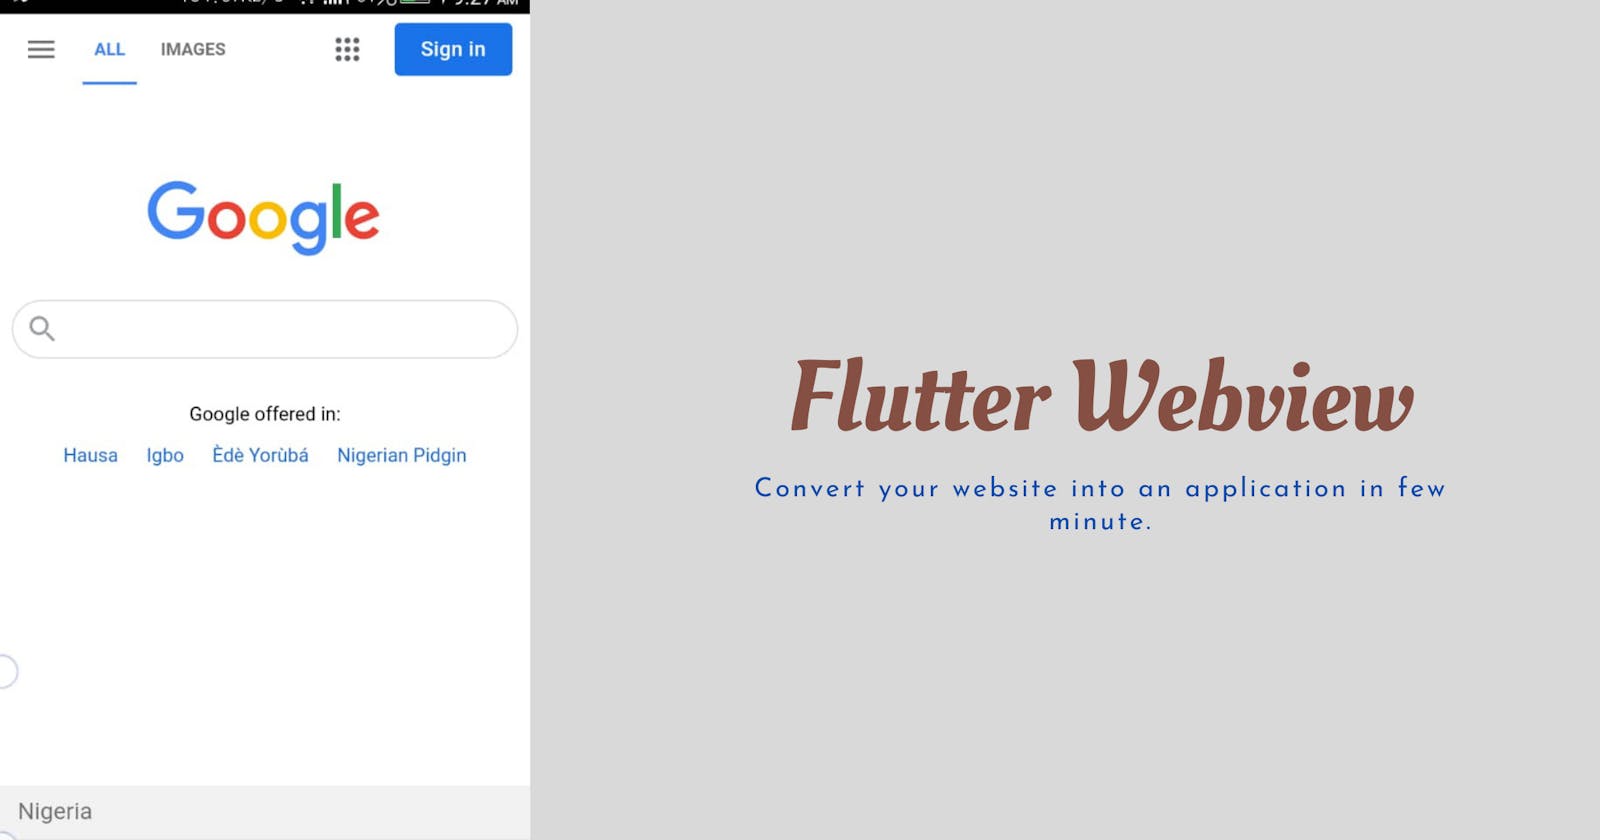 Convert your website into an application in a few minutes (FLUTTER WEBVIEW).